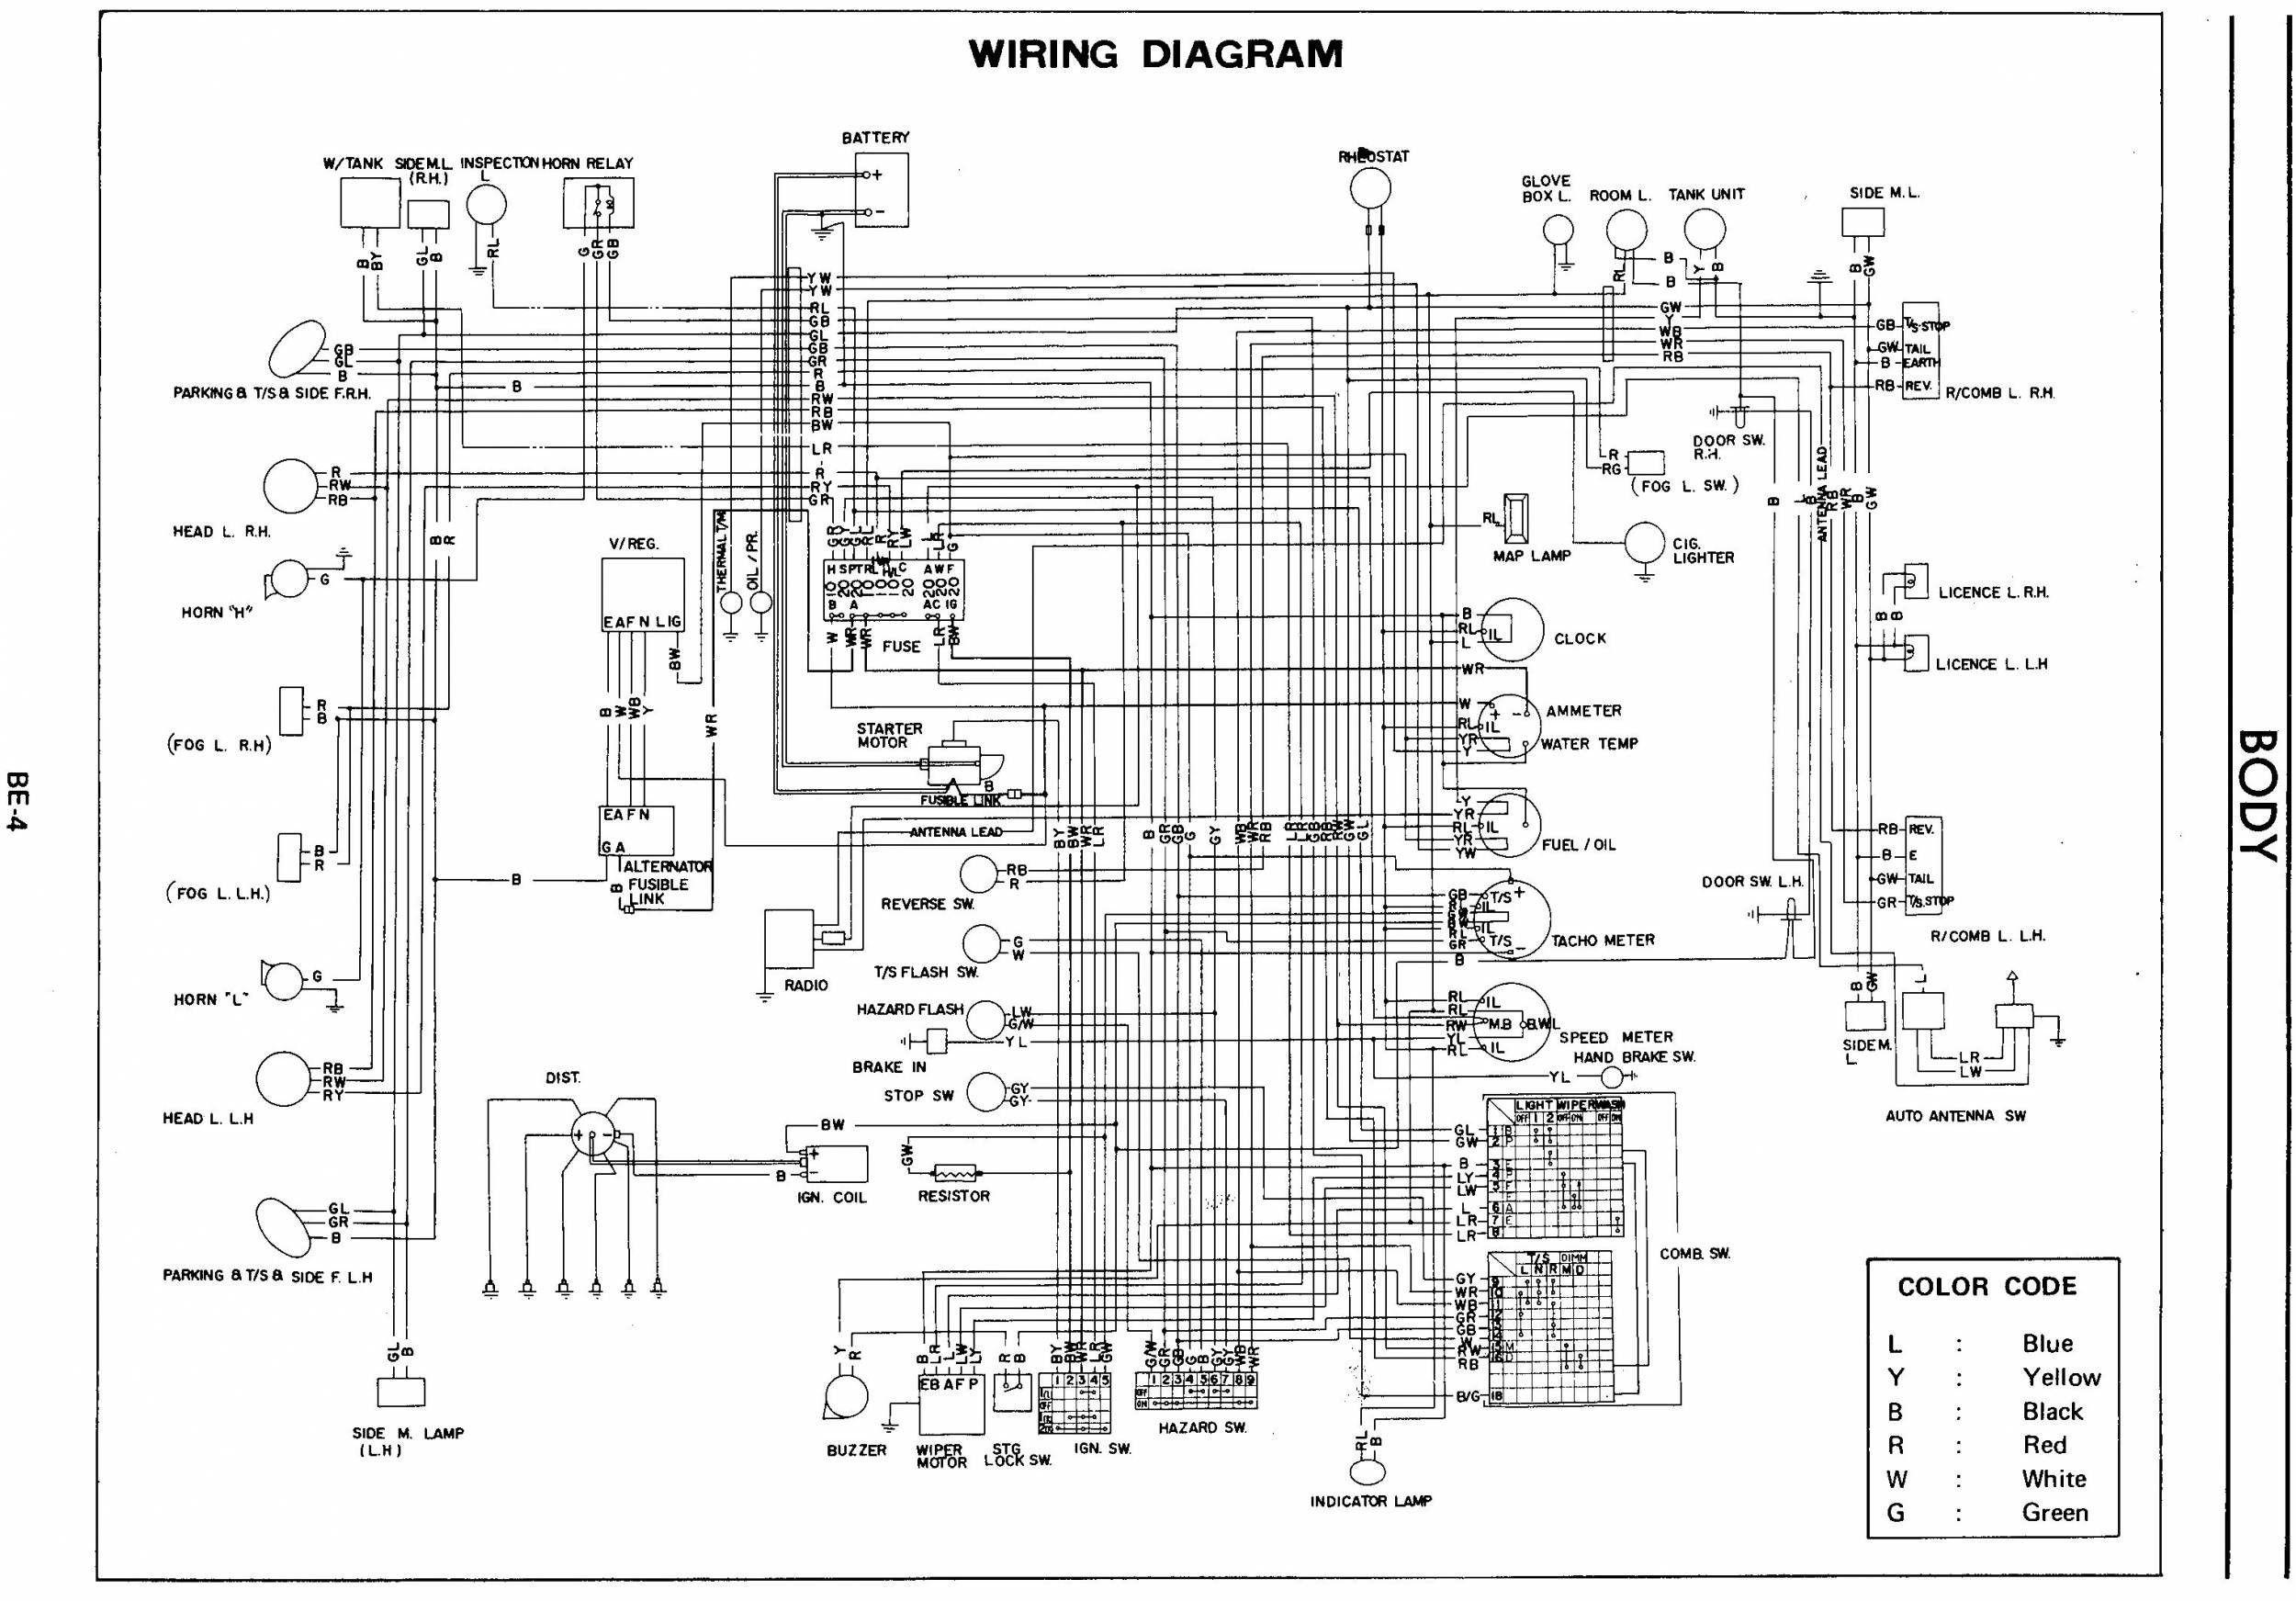 power wizard 1. 0 wiring diagram pdf